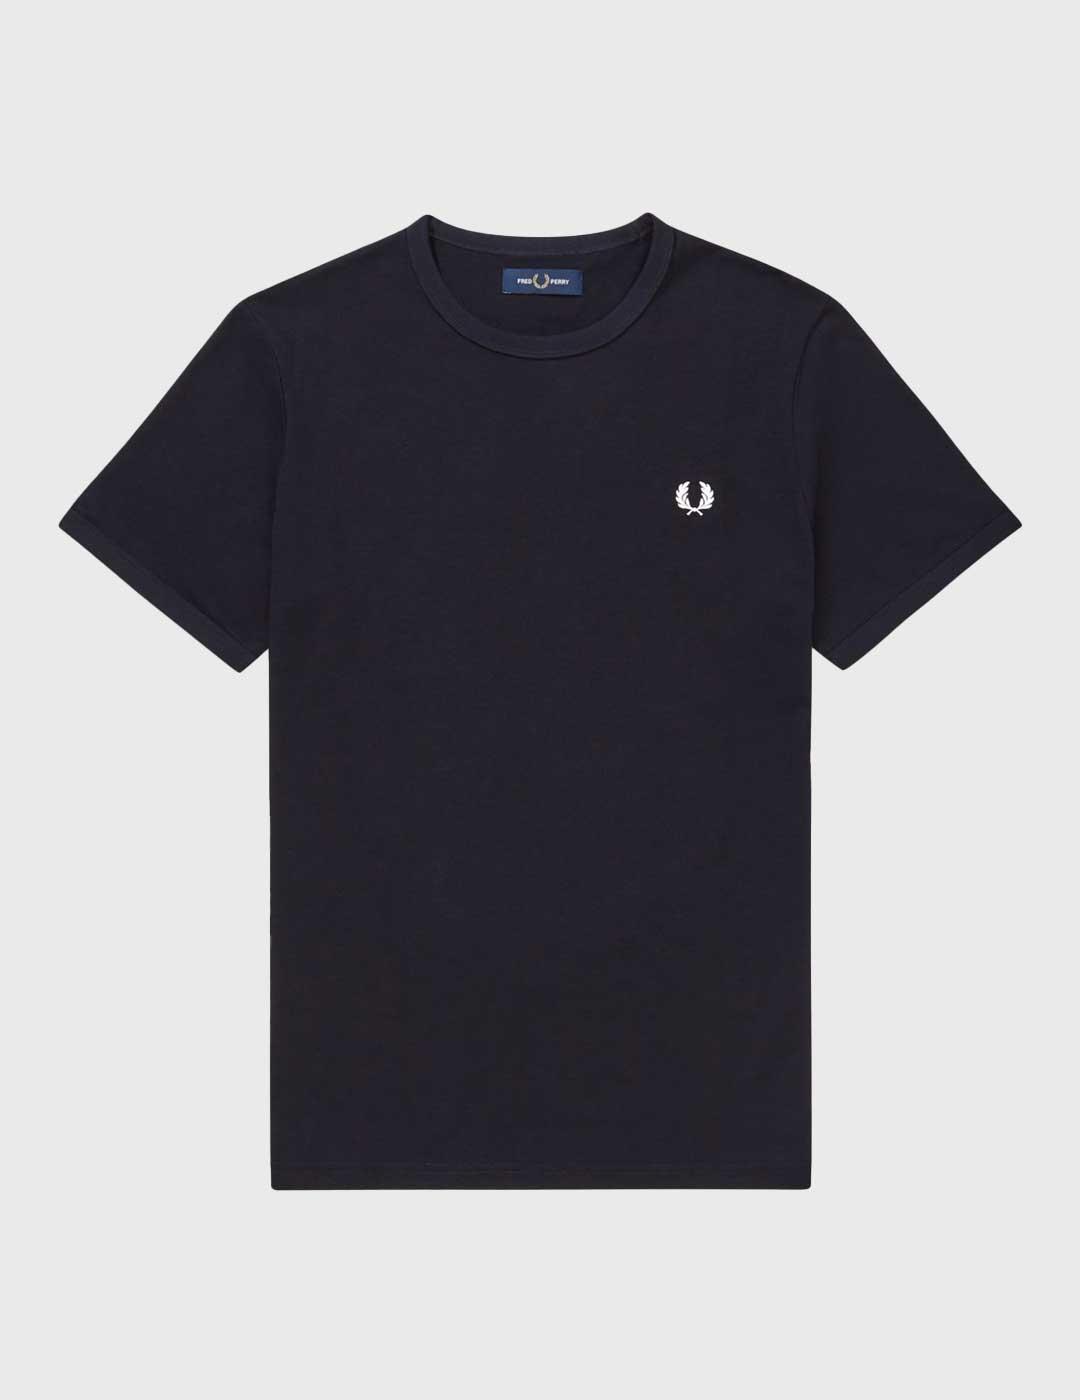 Fred Perry Ringer T Shirt Camiseta negra para hombre